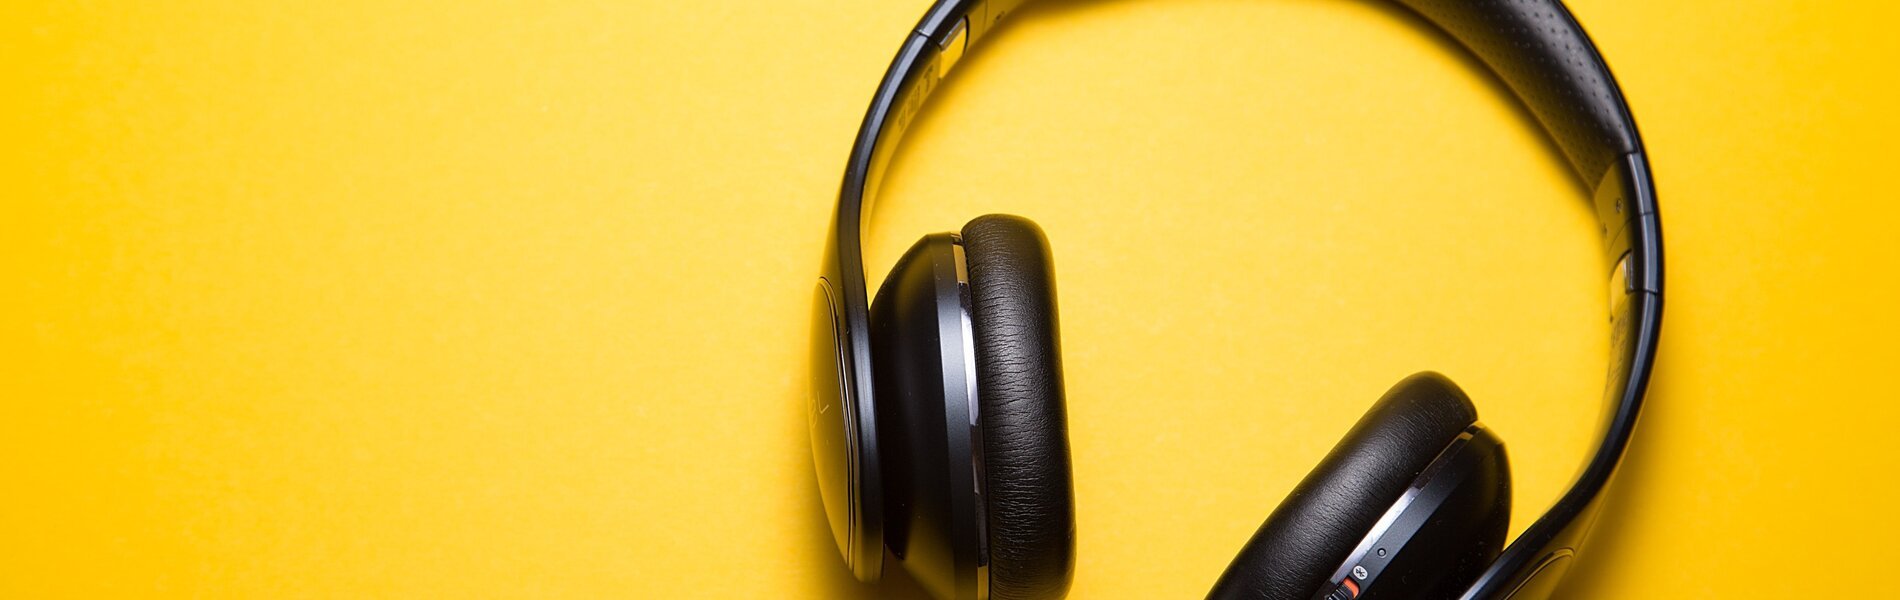 Audio muziekbeleving retail